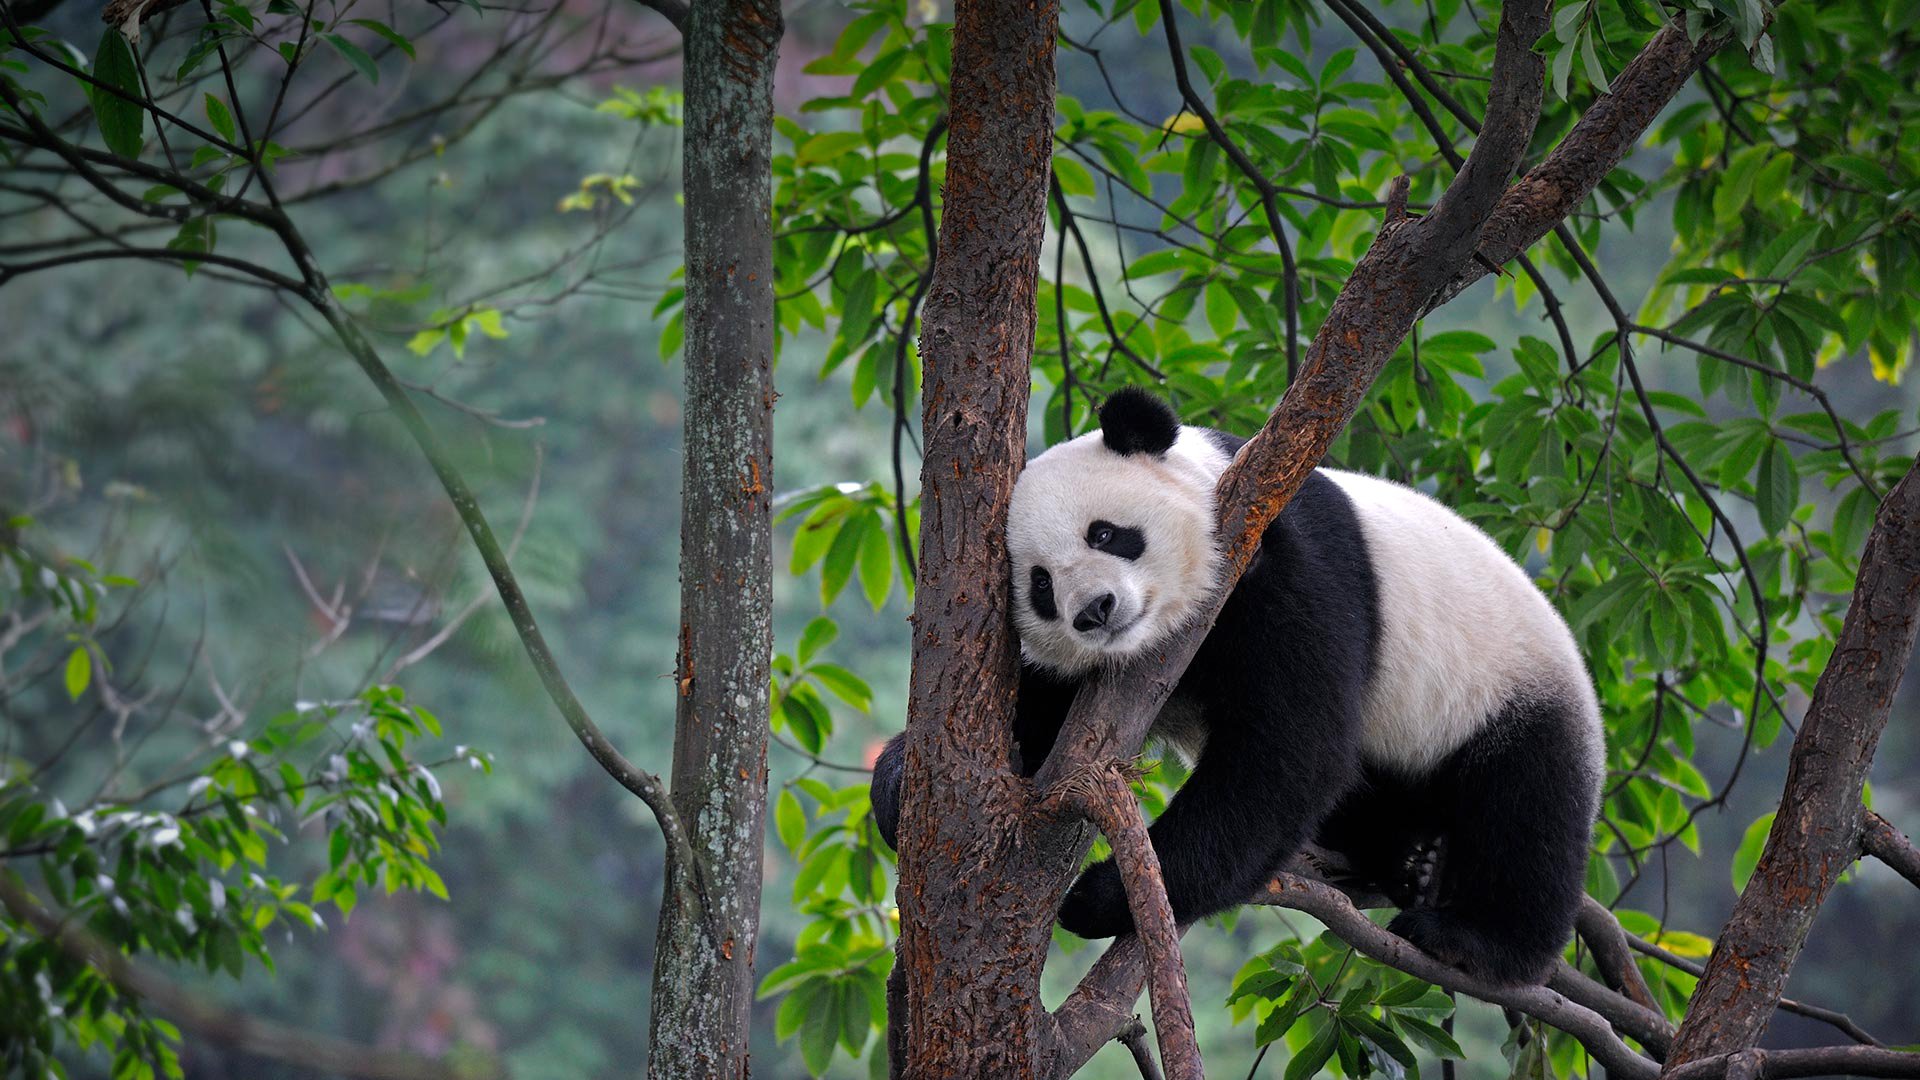  Panda  on tree HD Wallpaper Background Image 1920x1080  